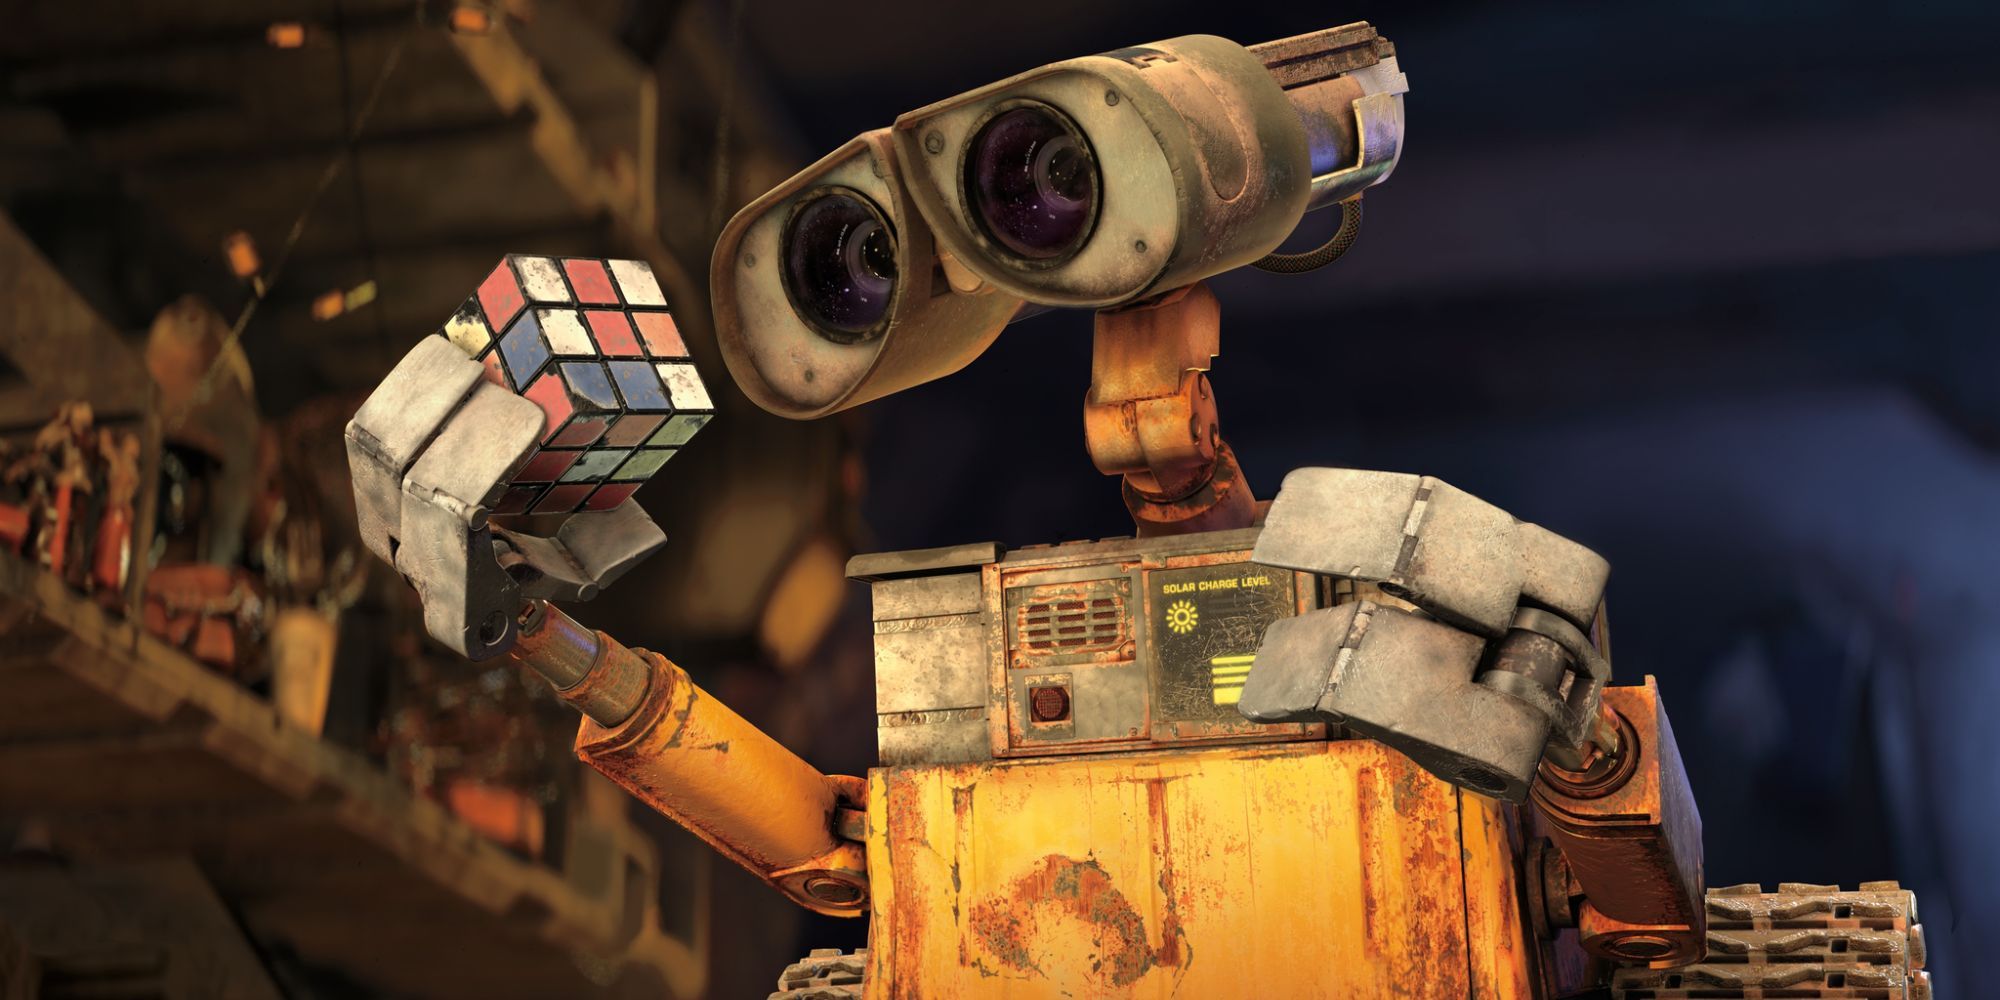 WALL-E holding a rubik's cube